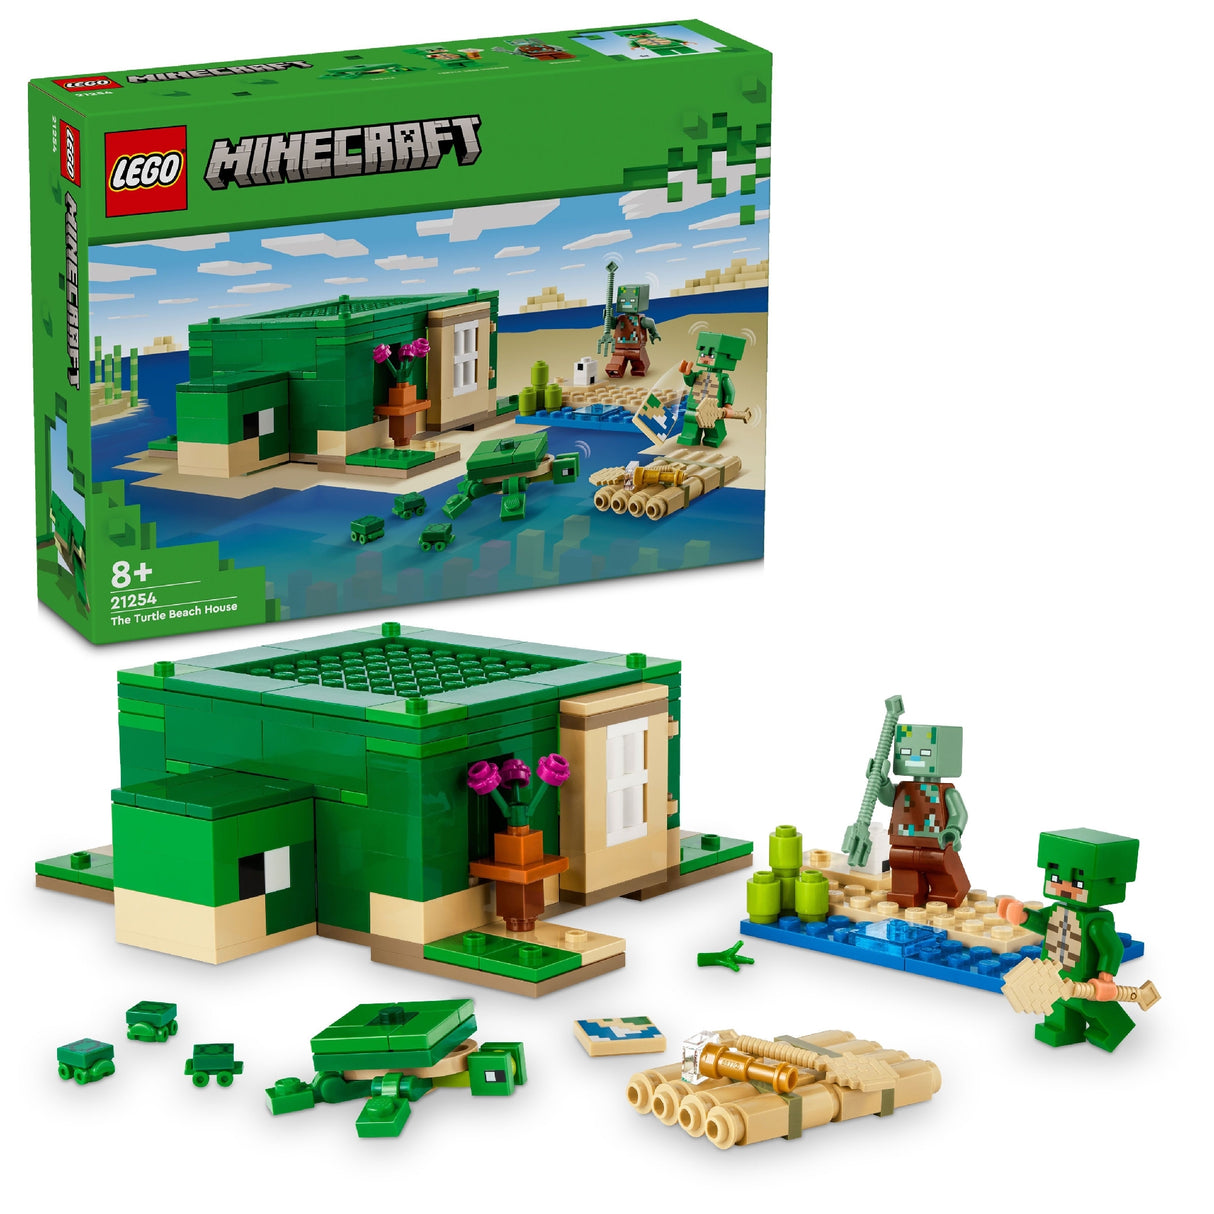 LEGO MINECRAFT THE TURTLE BEACH HOUSE 21254 AGE: 8+